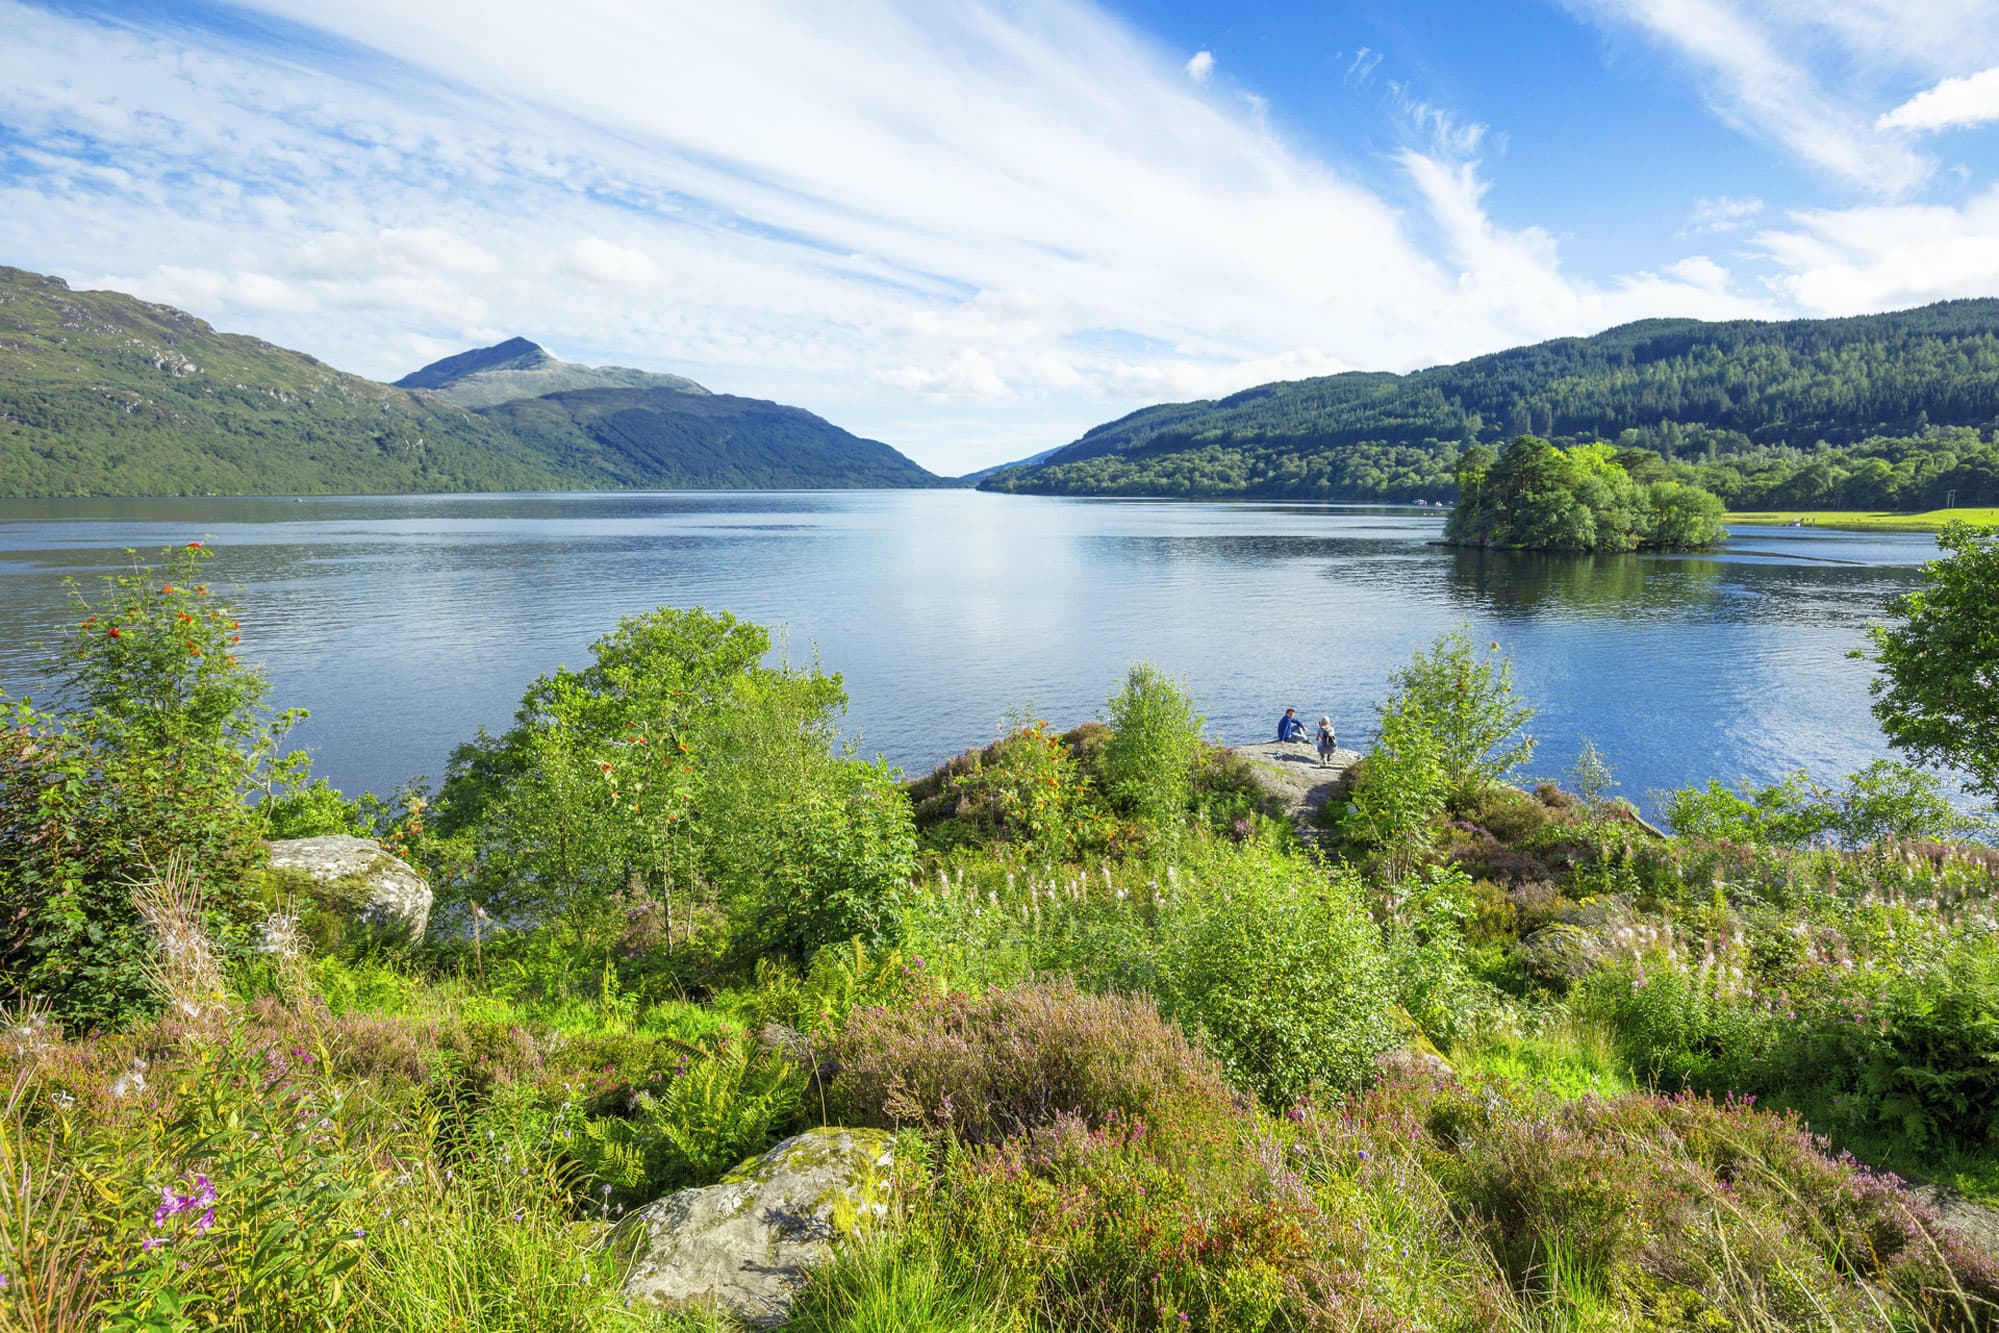 Loch Lomond | Kenny Lam | VisitScotland